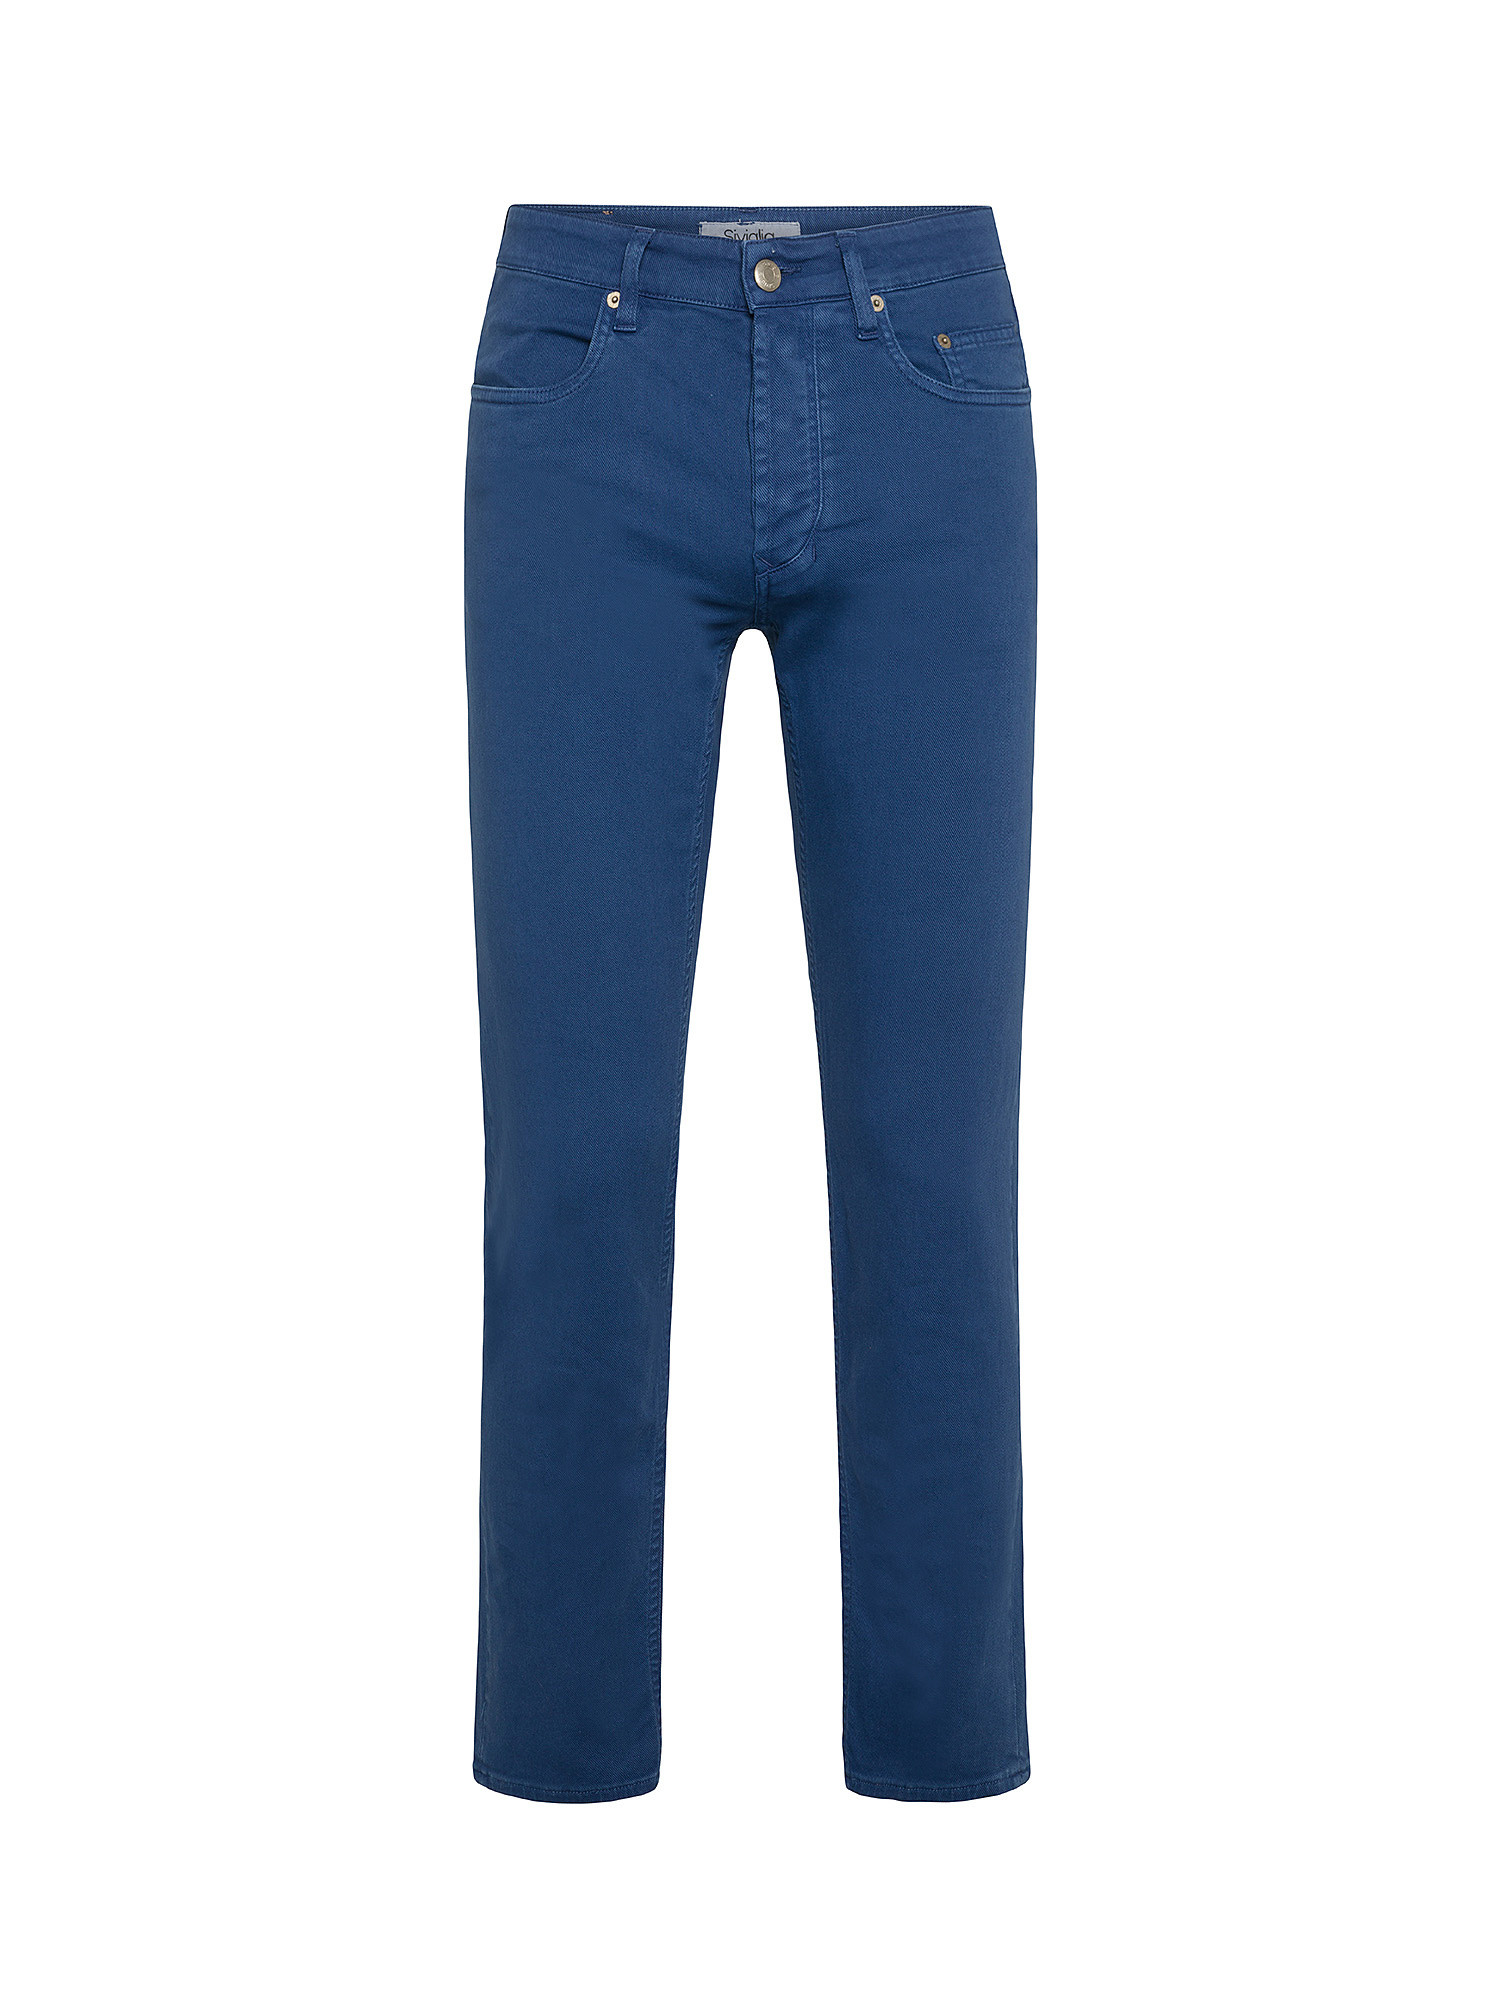 Siviglia - Pantaloni cinque tasche, Blu royal, large image number 0